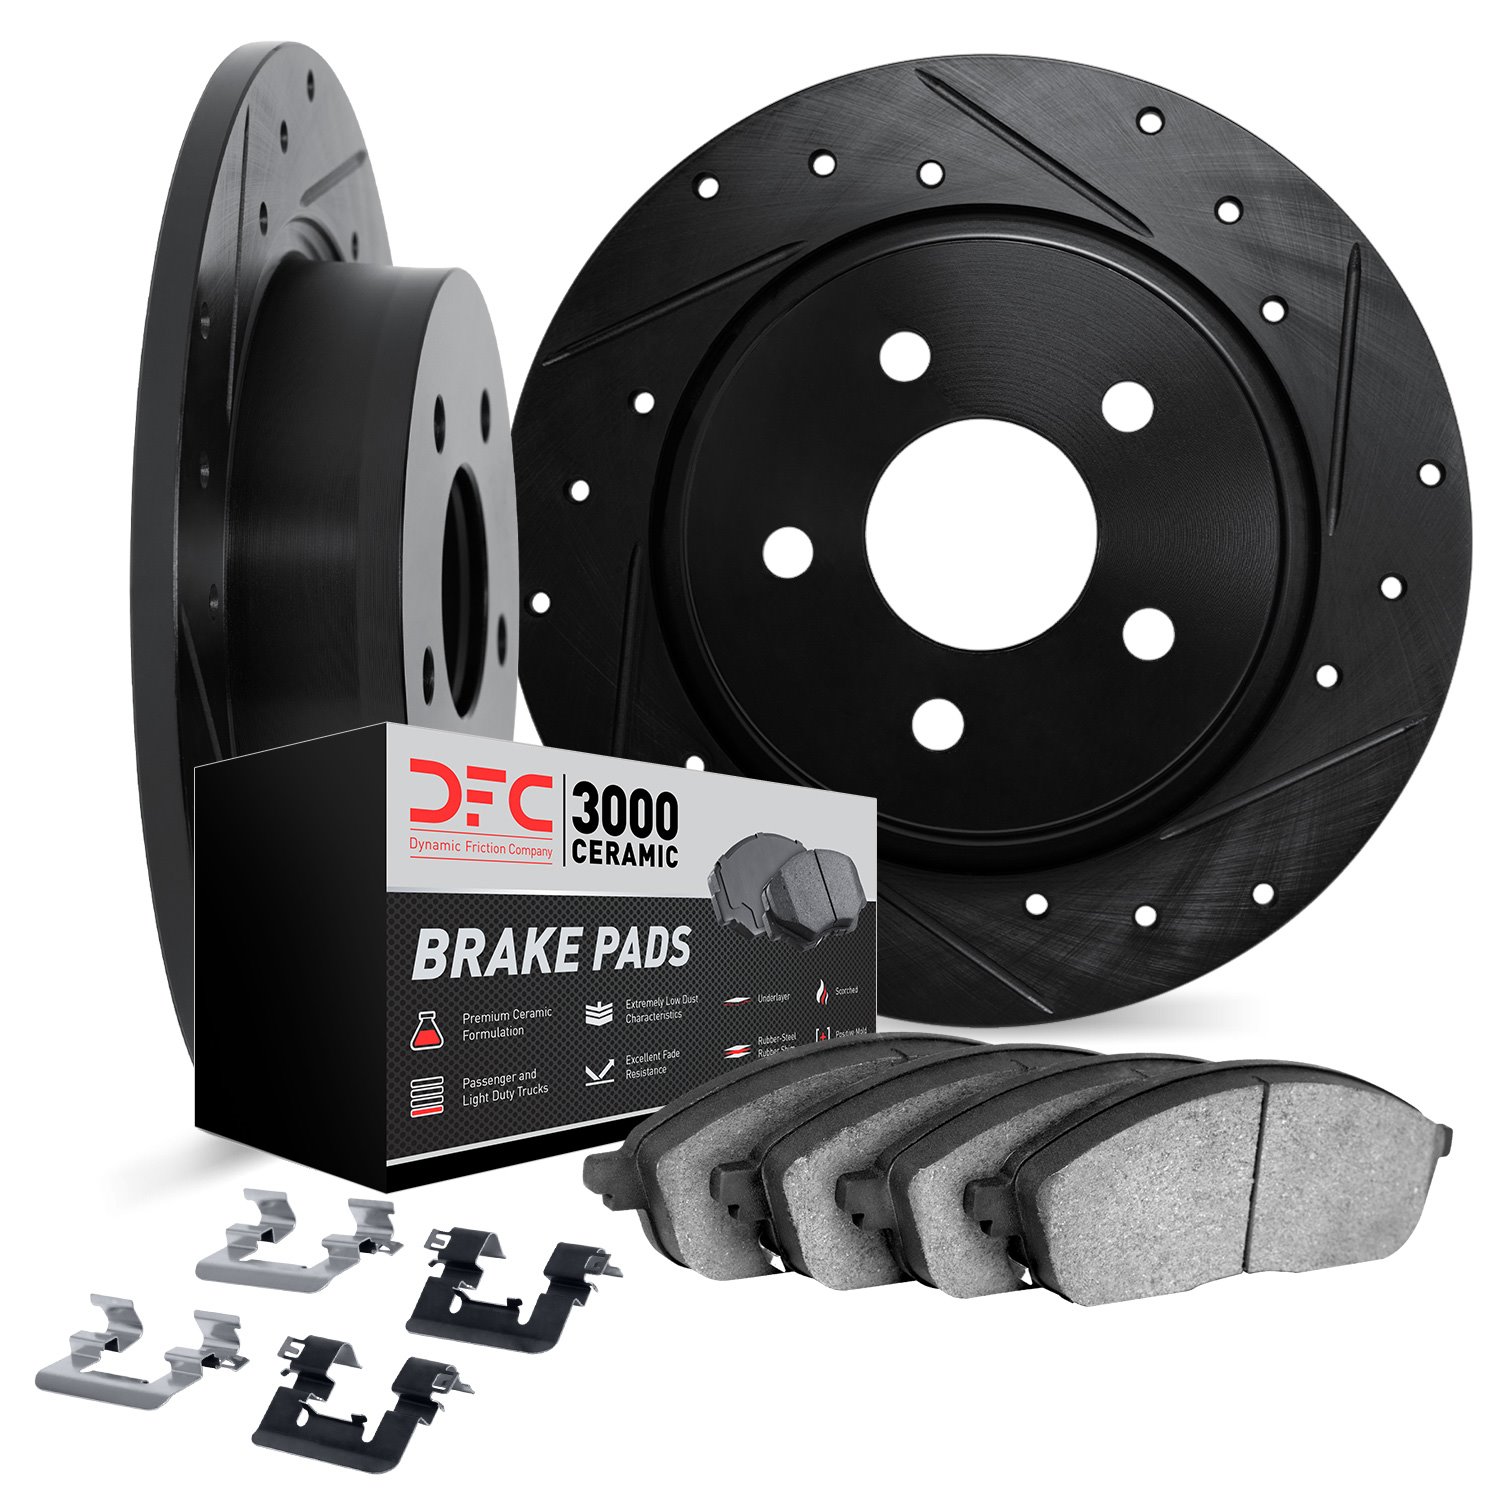 8312-21047 Drilled/Slotted Brake Rotors with 3000-Series Ceramic Brake Pads Kit & Hardware [Black], Fits Select Kia/Hyundai/Gene